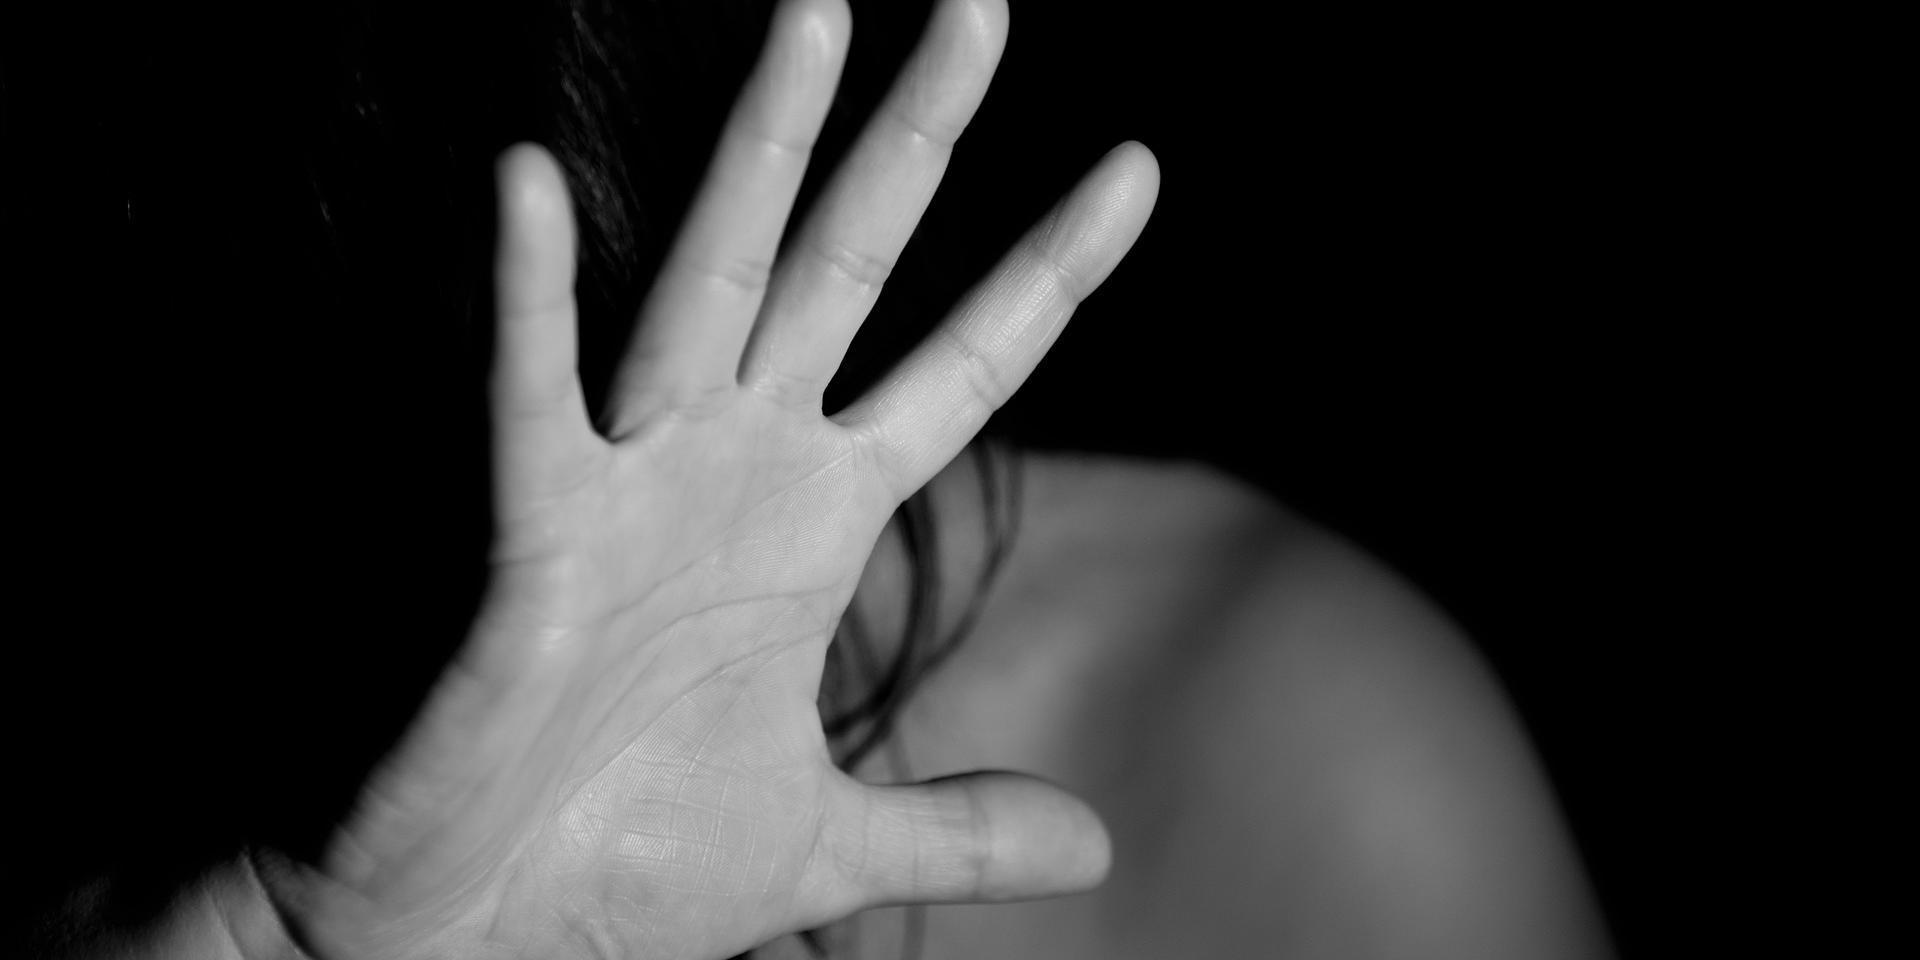 Domestic violence 'falls between' the cracks at national level, charities warn